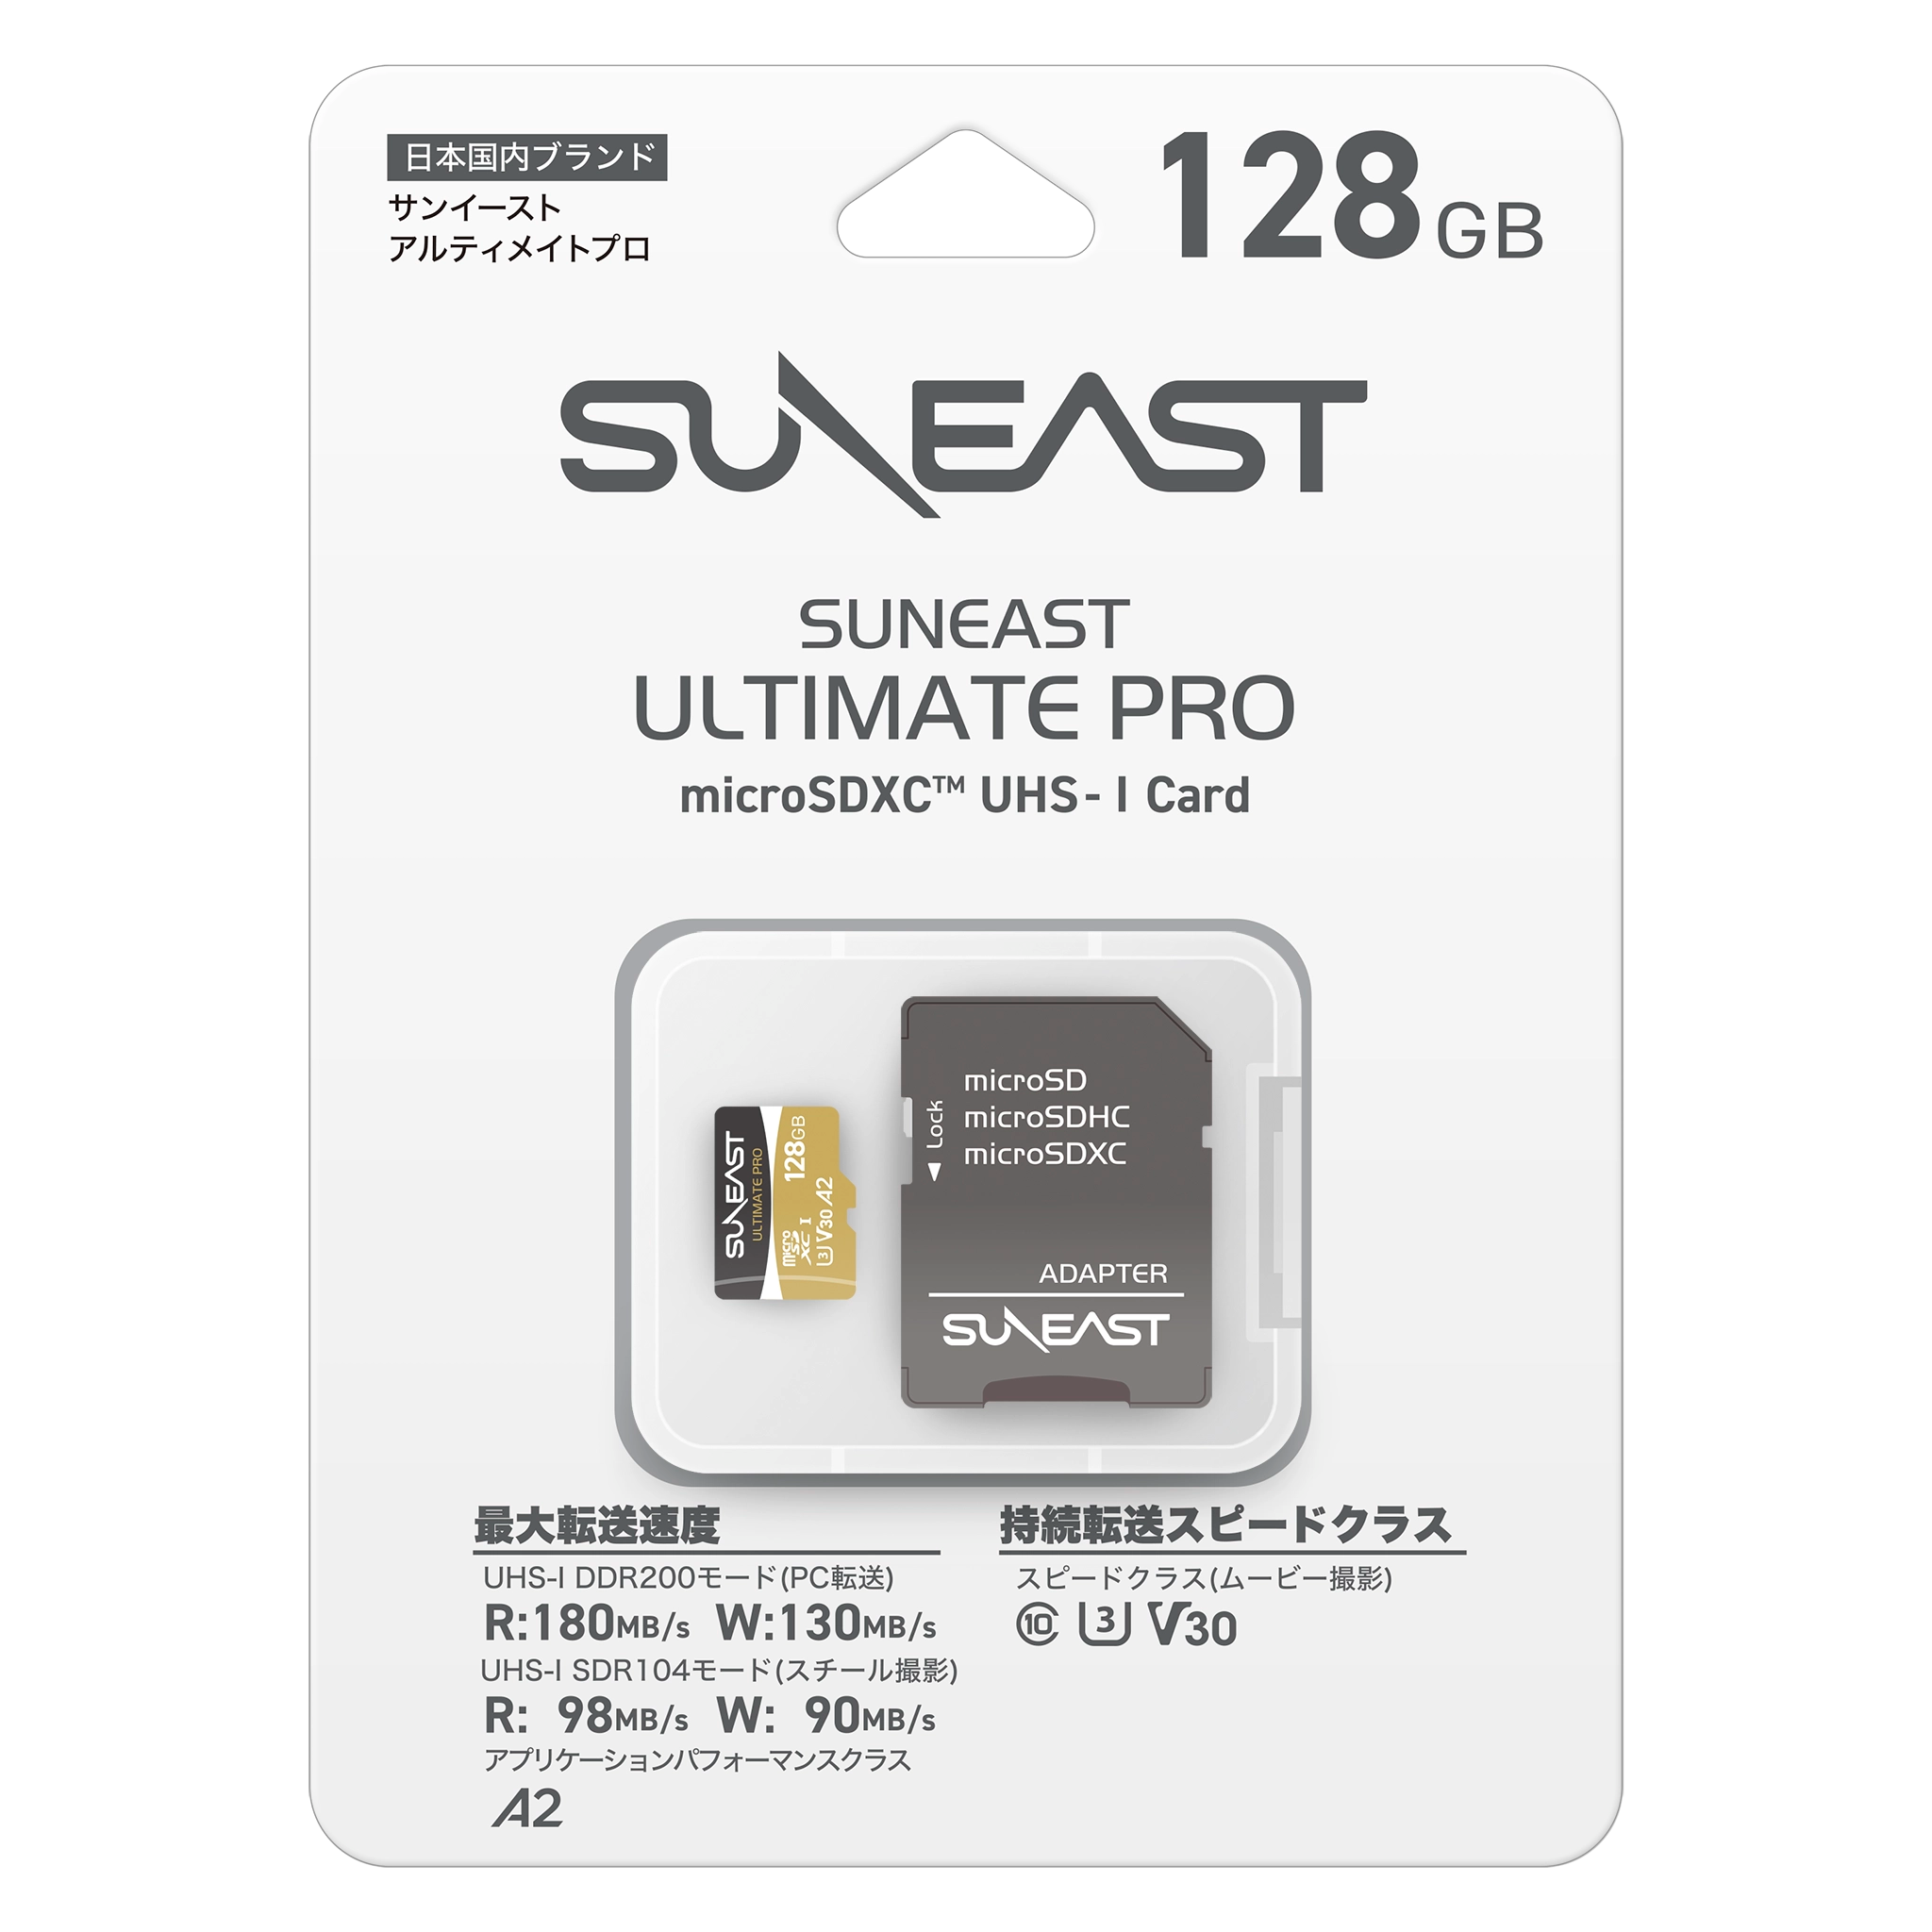 ULTIMATE PRO microSDXC【GOLD】ホワイトパッケージ版 128GB - SUNEAST 